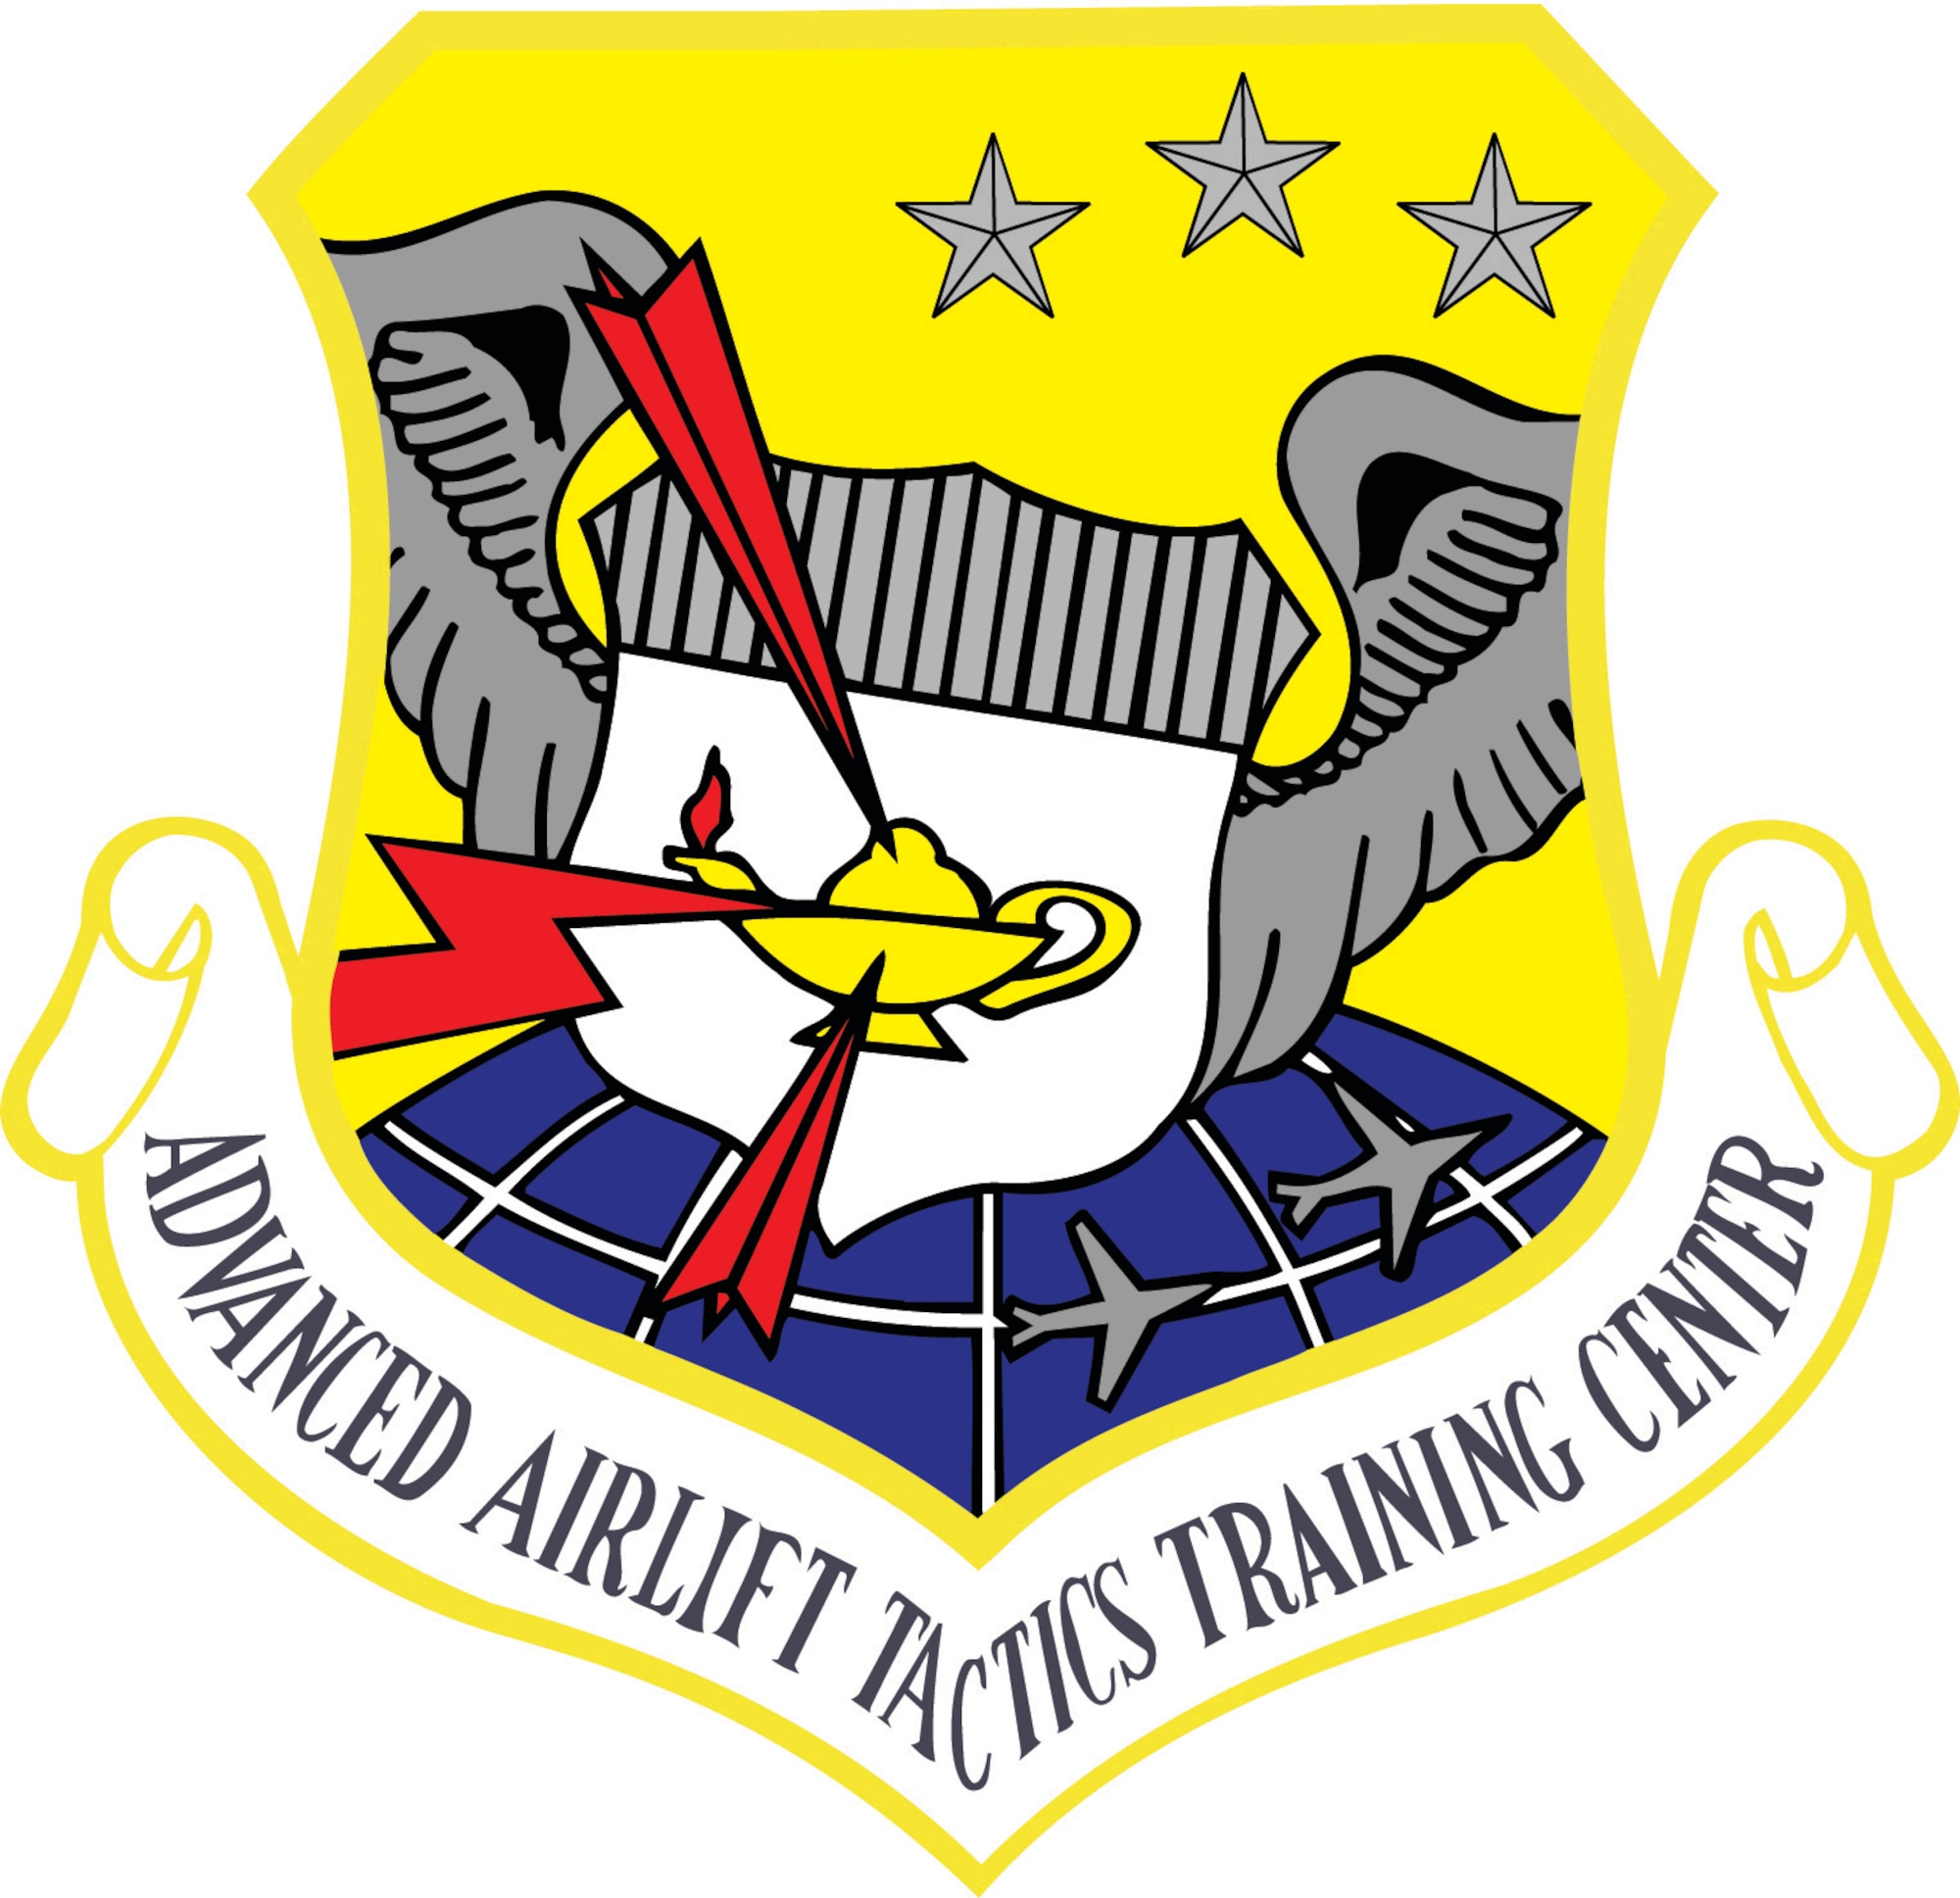 Advanced Airlift Tactics Training school shield.